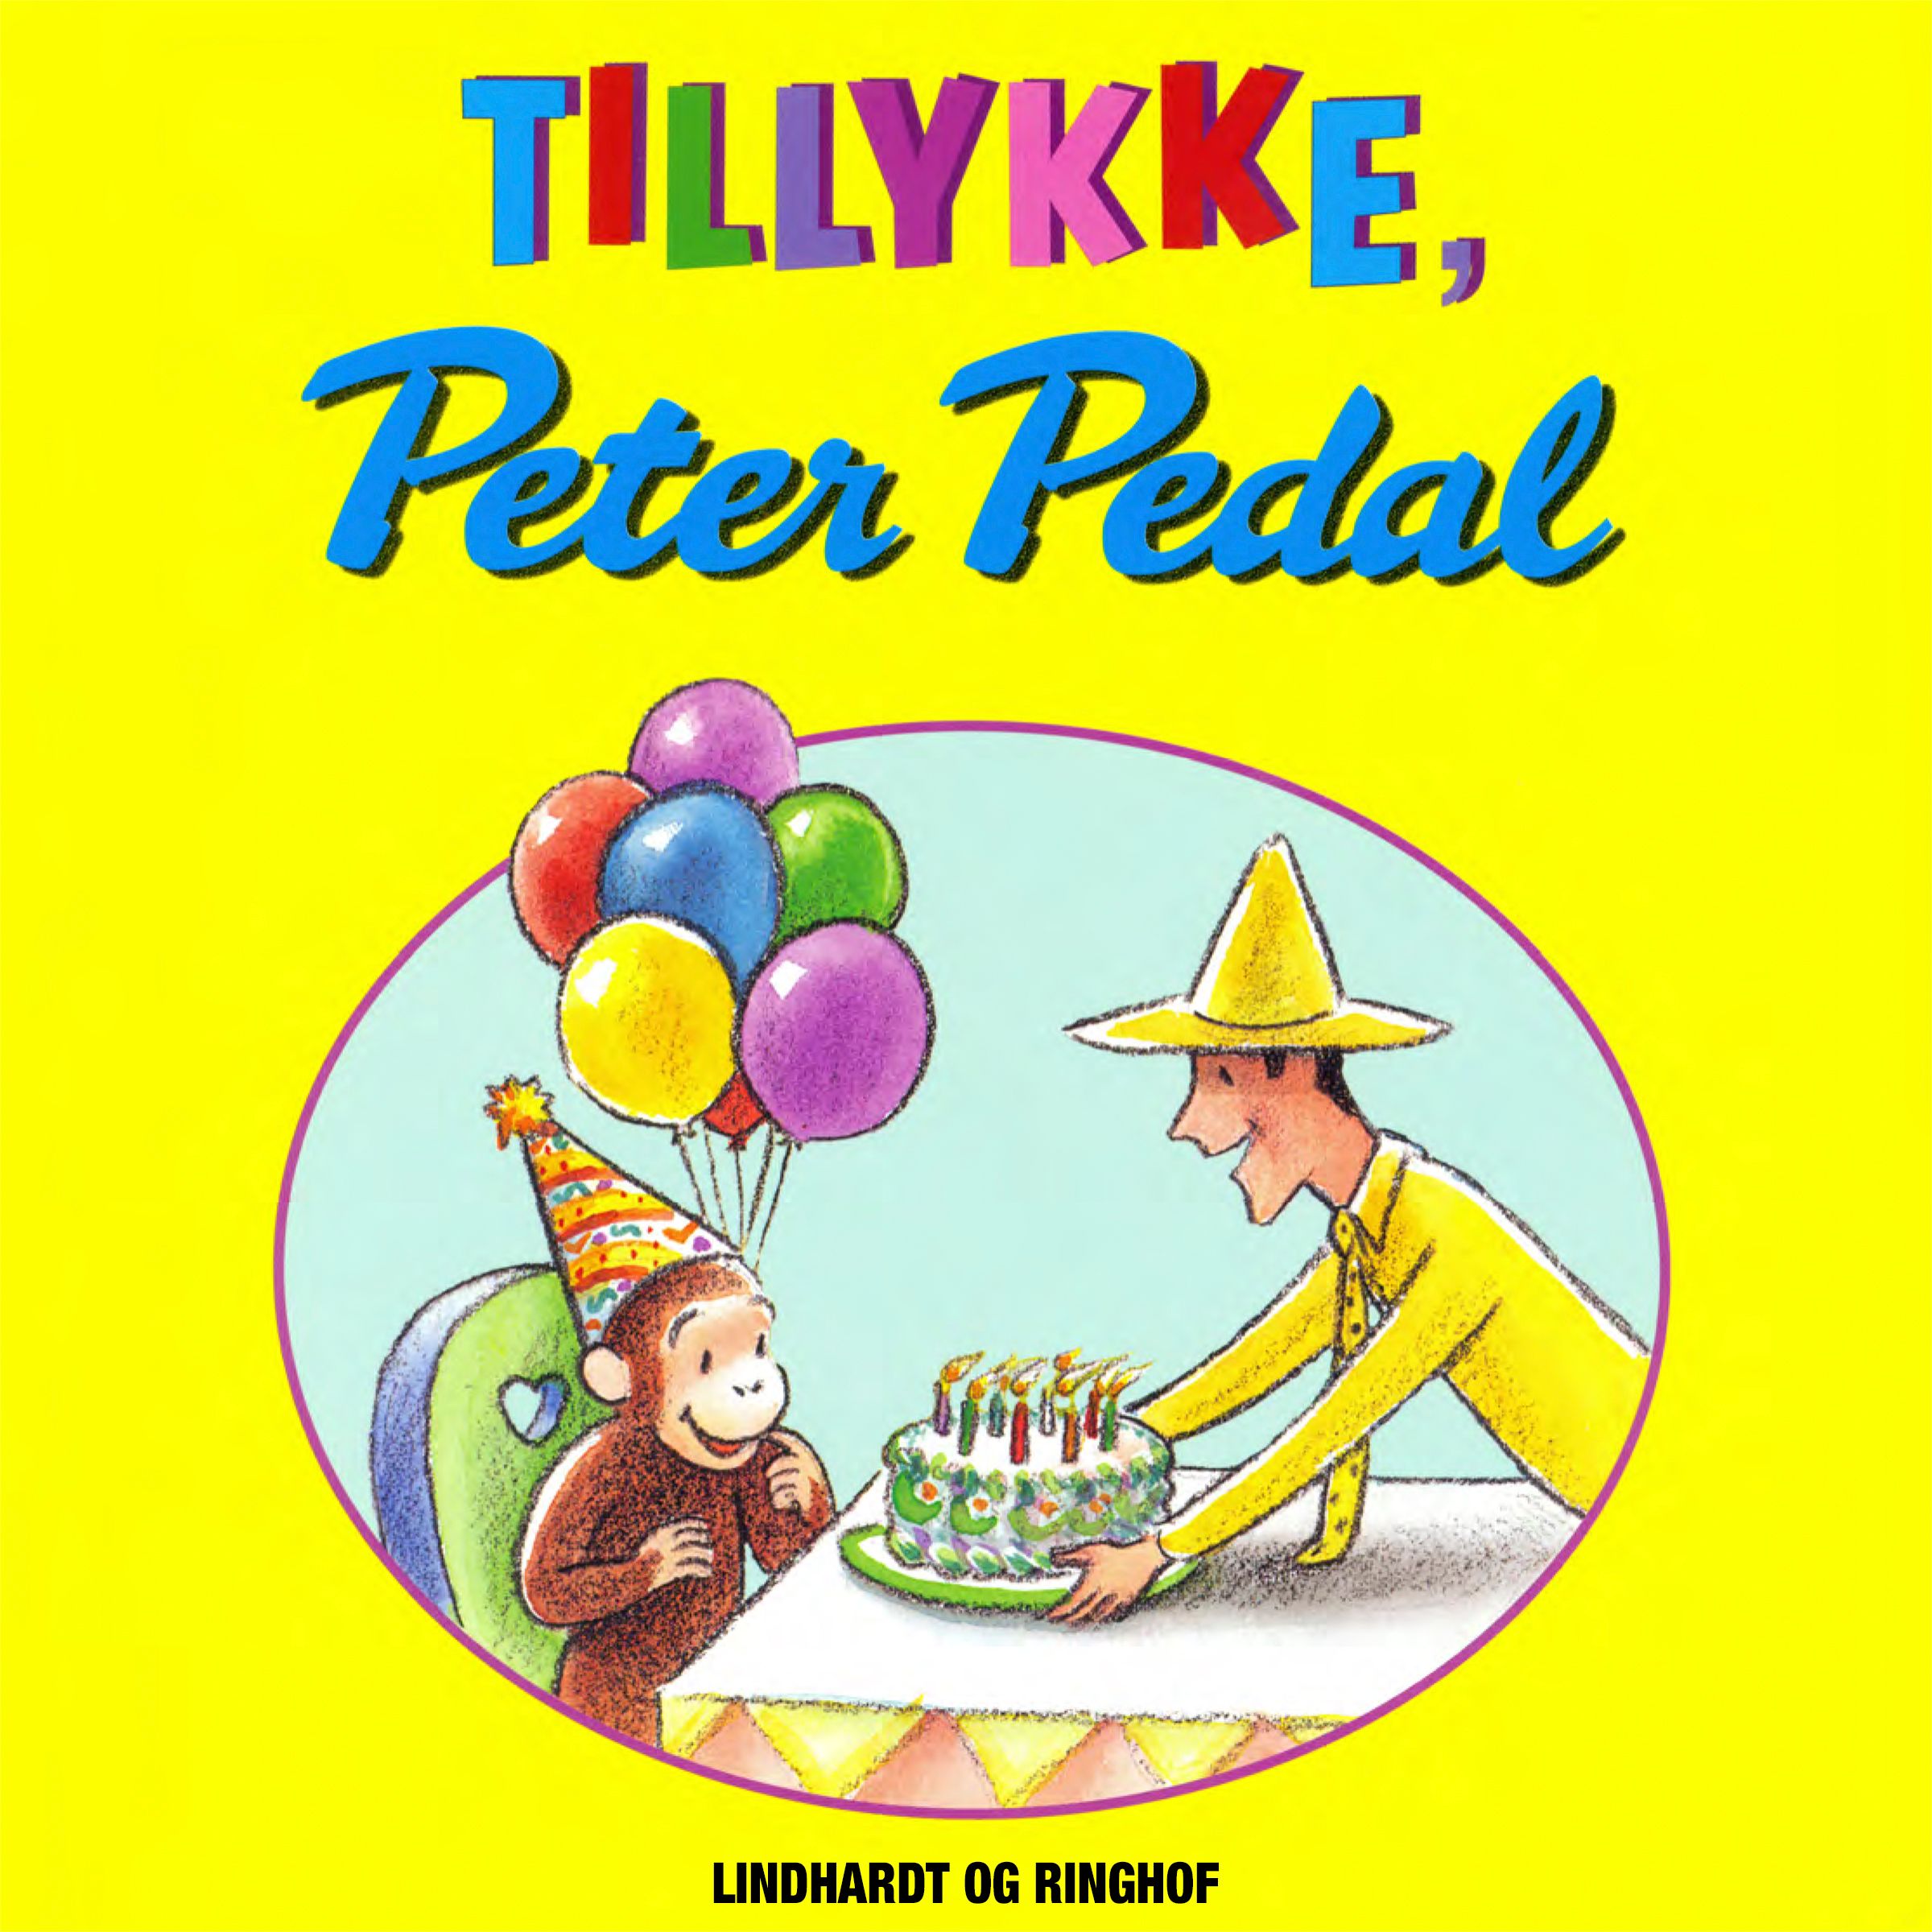 Tillykke, Peter Pedal, ljudbok av Margret Og H.a. Rey